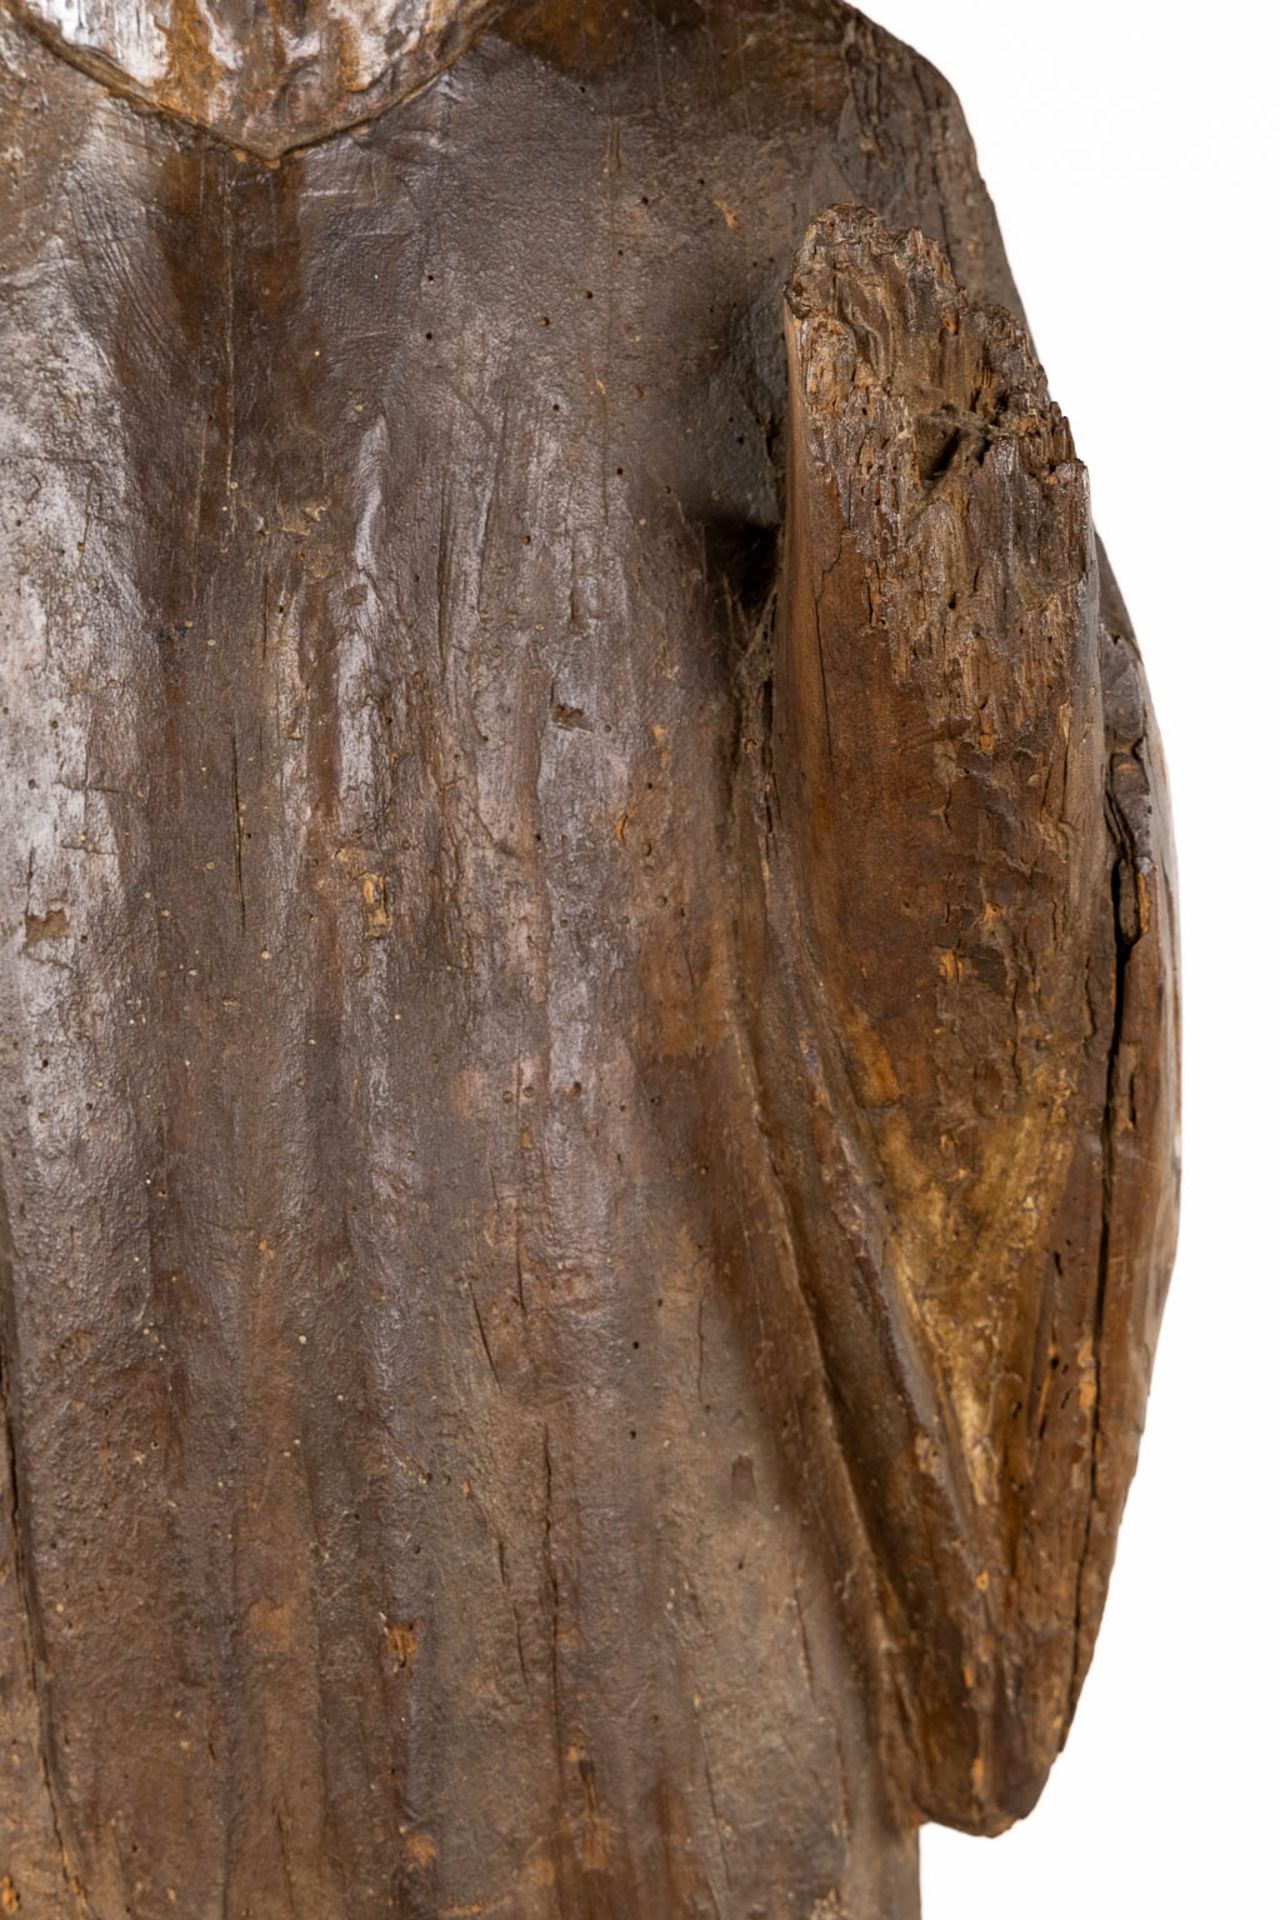 An antique wood-sculptured figurine of Saint John. 14th C. (L:21 x W:31 x H:140 cm) - Image 9 of 12